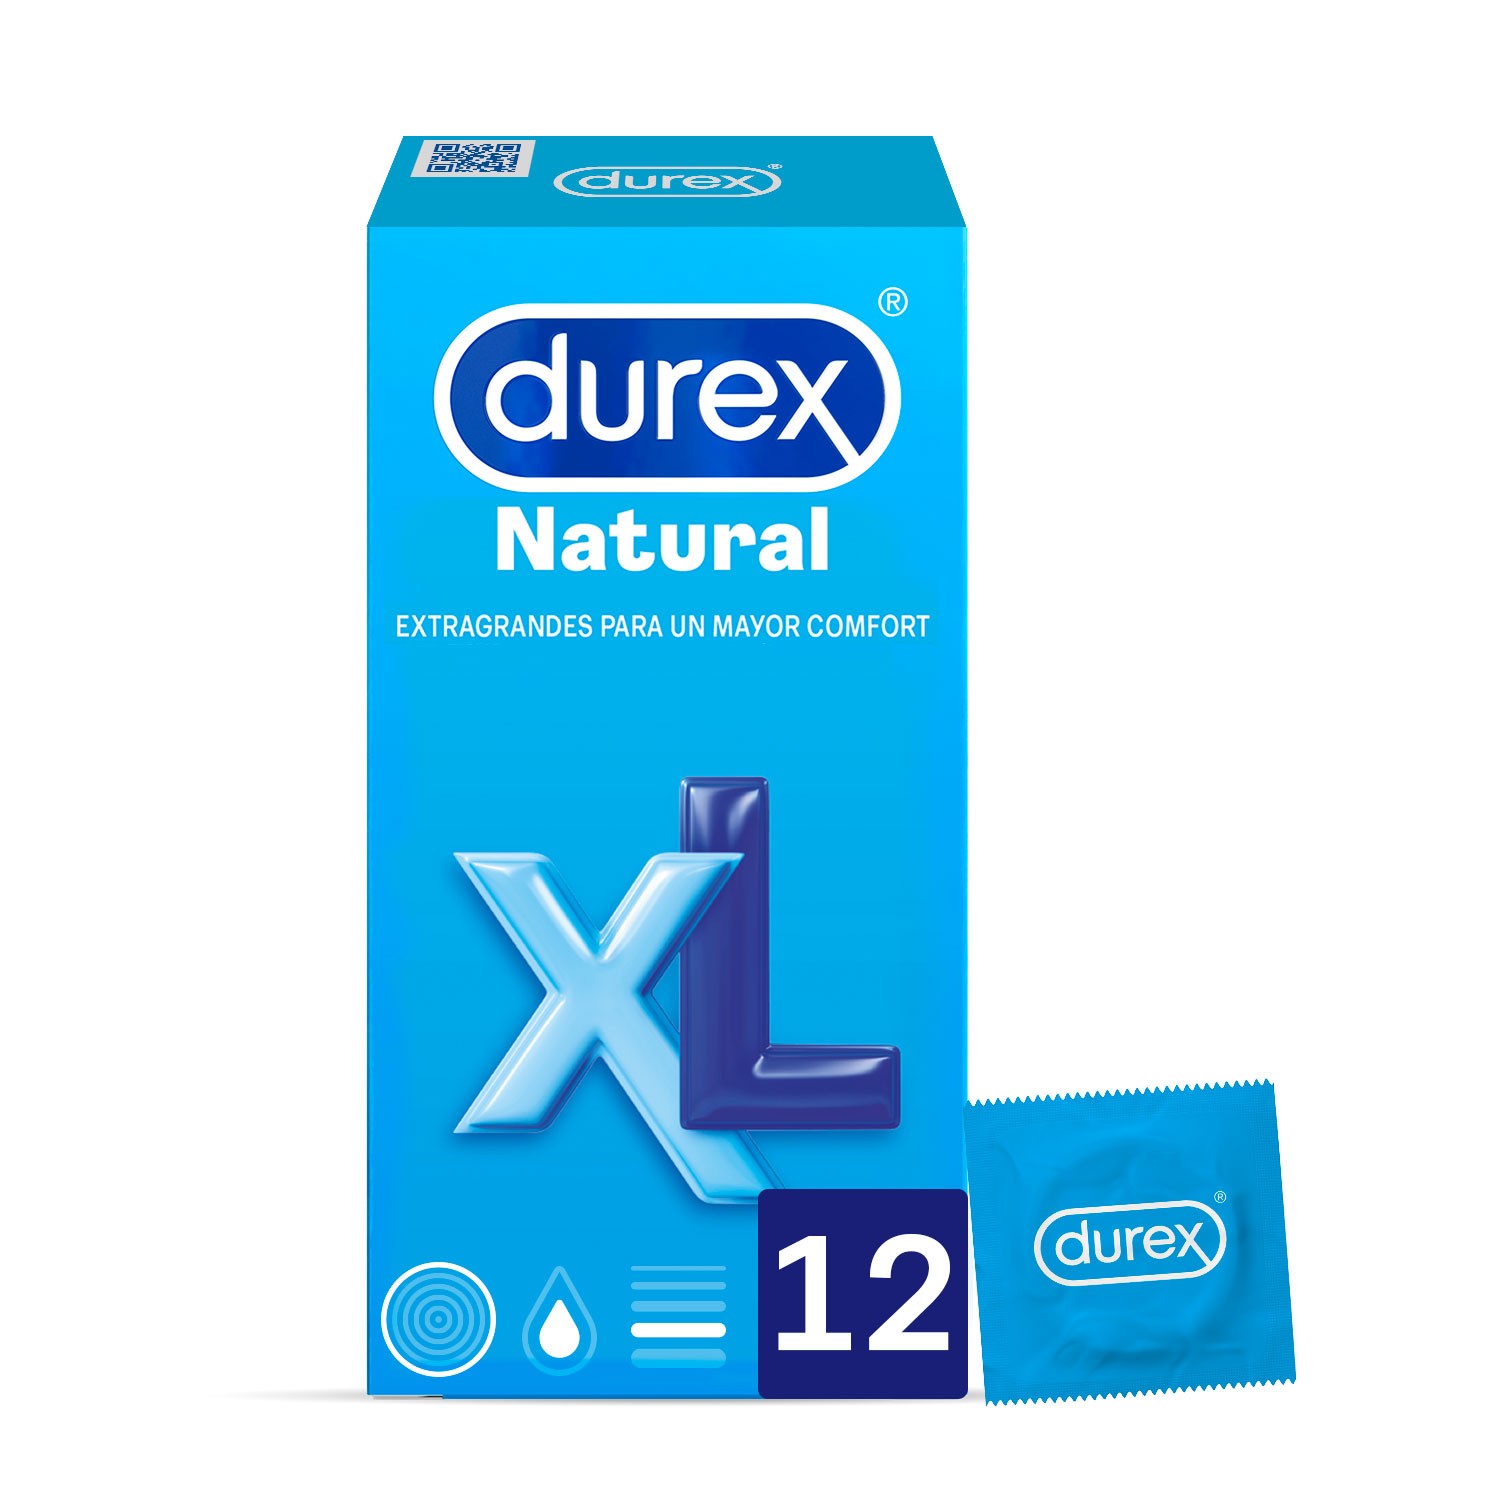 DUREX Natural Condom XL Extra Large OFFER 12 units